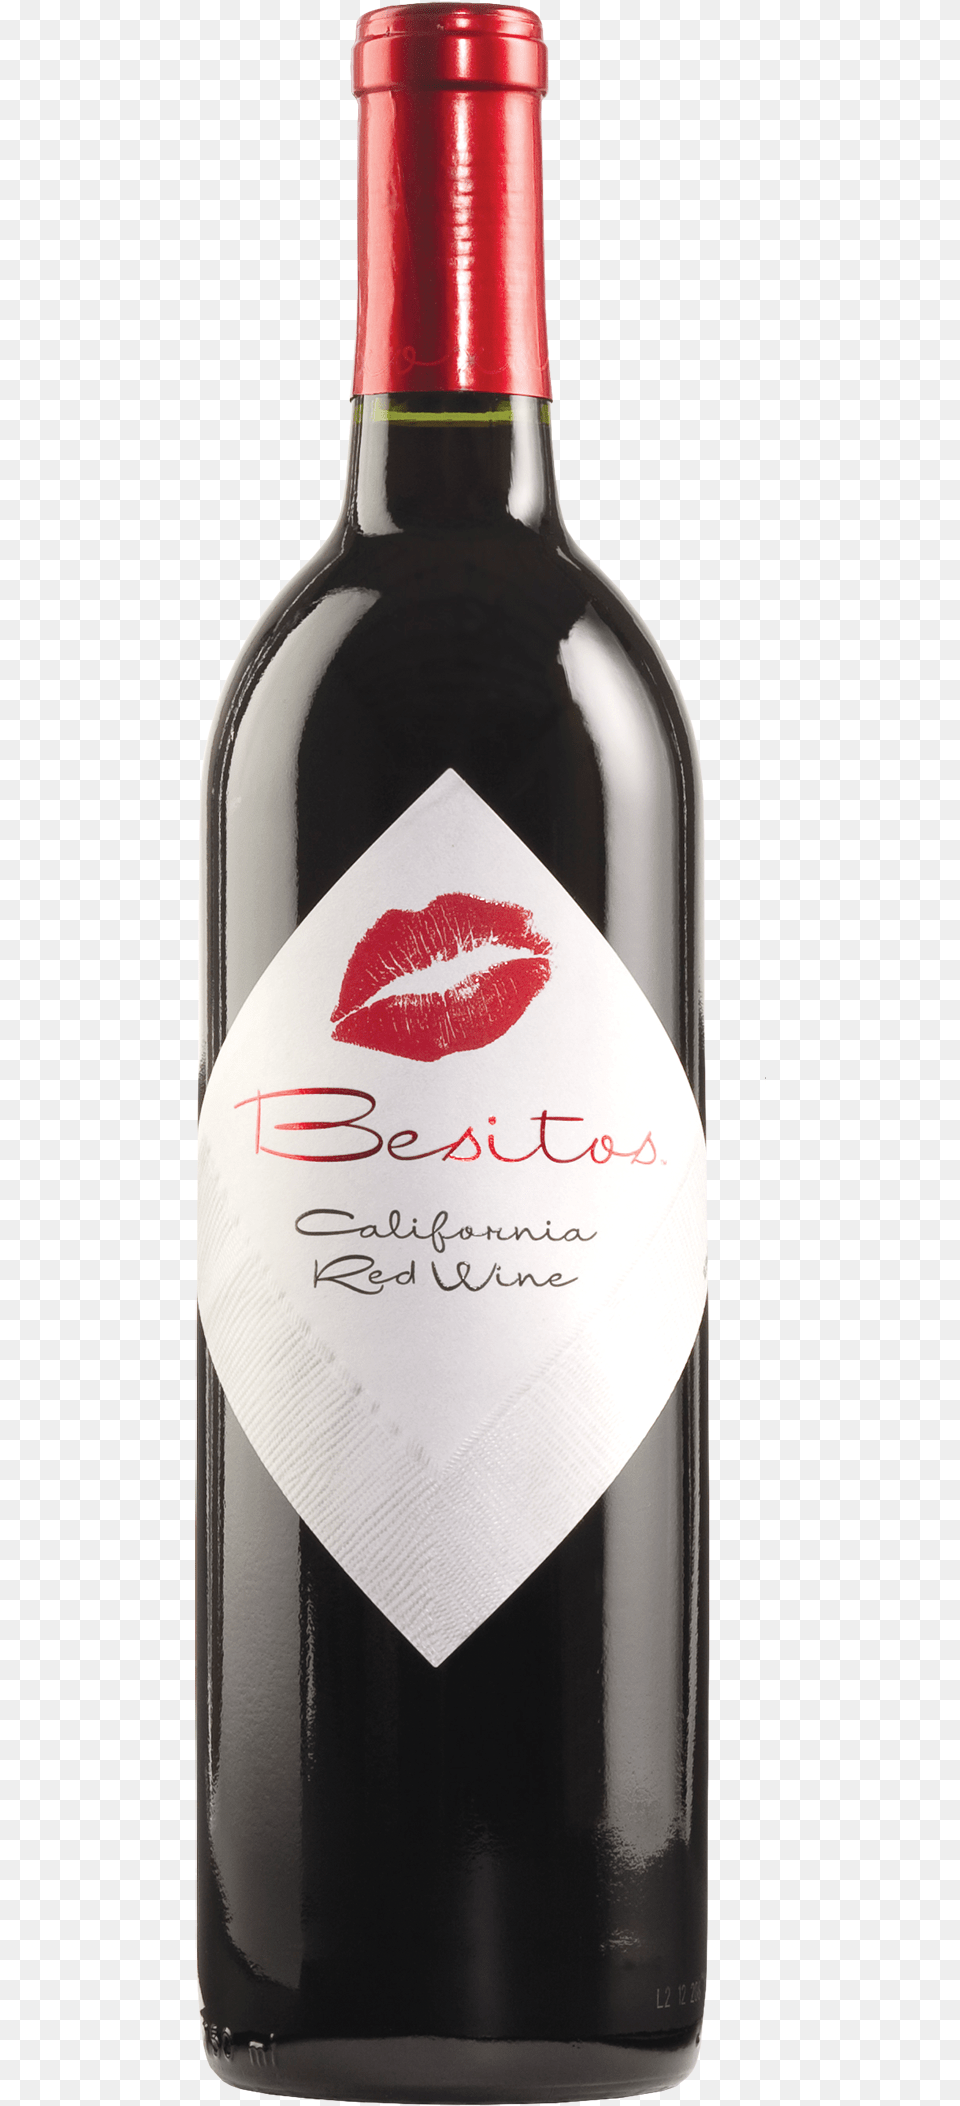 Red Wine Bottle, Alcohol, Red Wine, Liquor, Wine Bottle Png Image